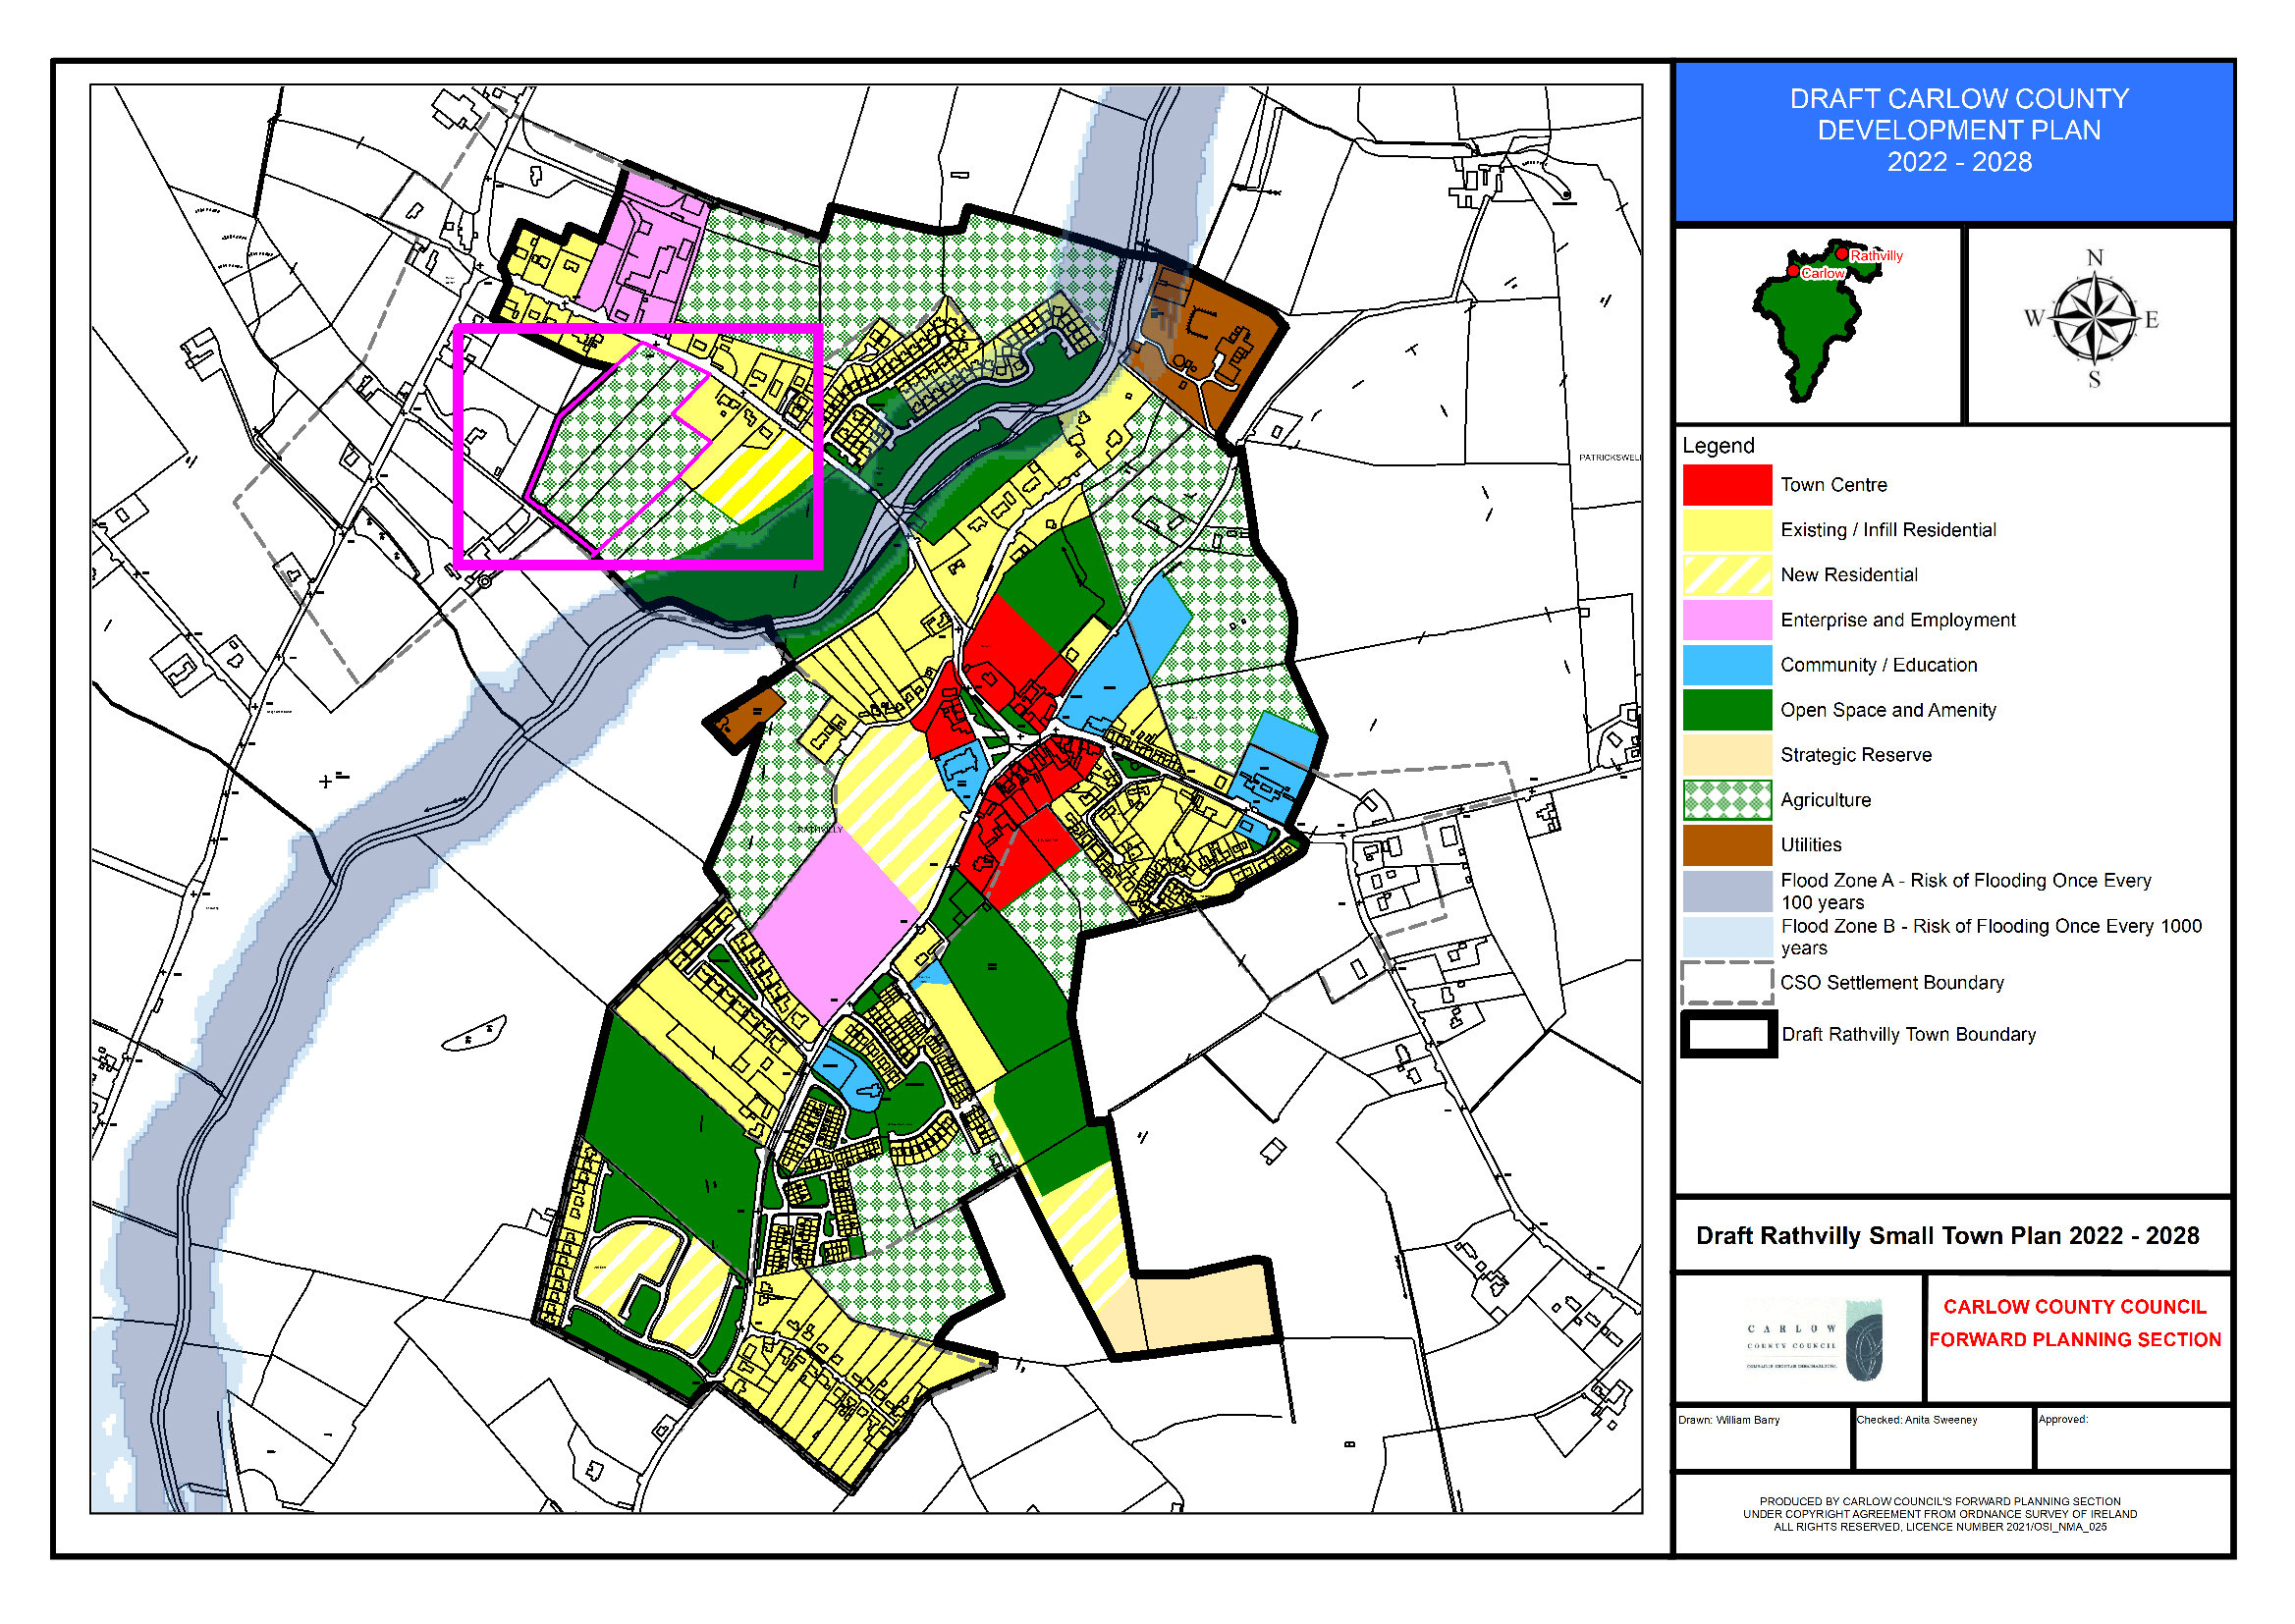 Draft Rathvilly Small Town Plan 2022-2028